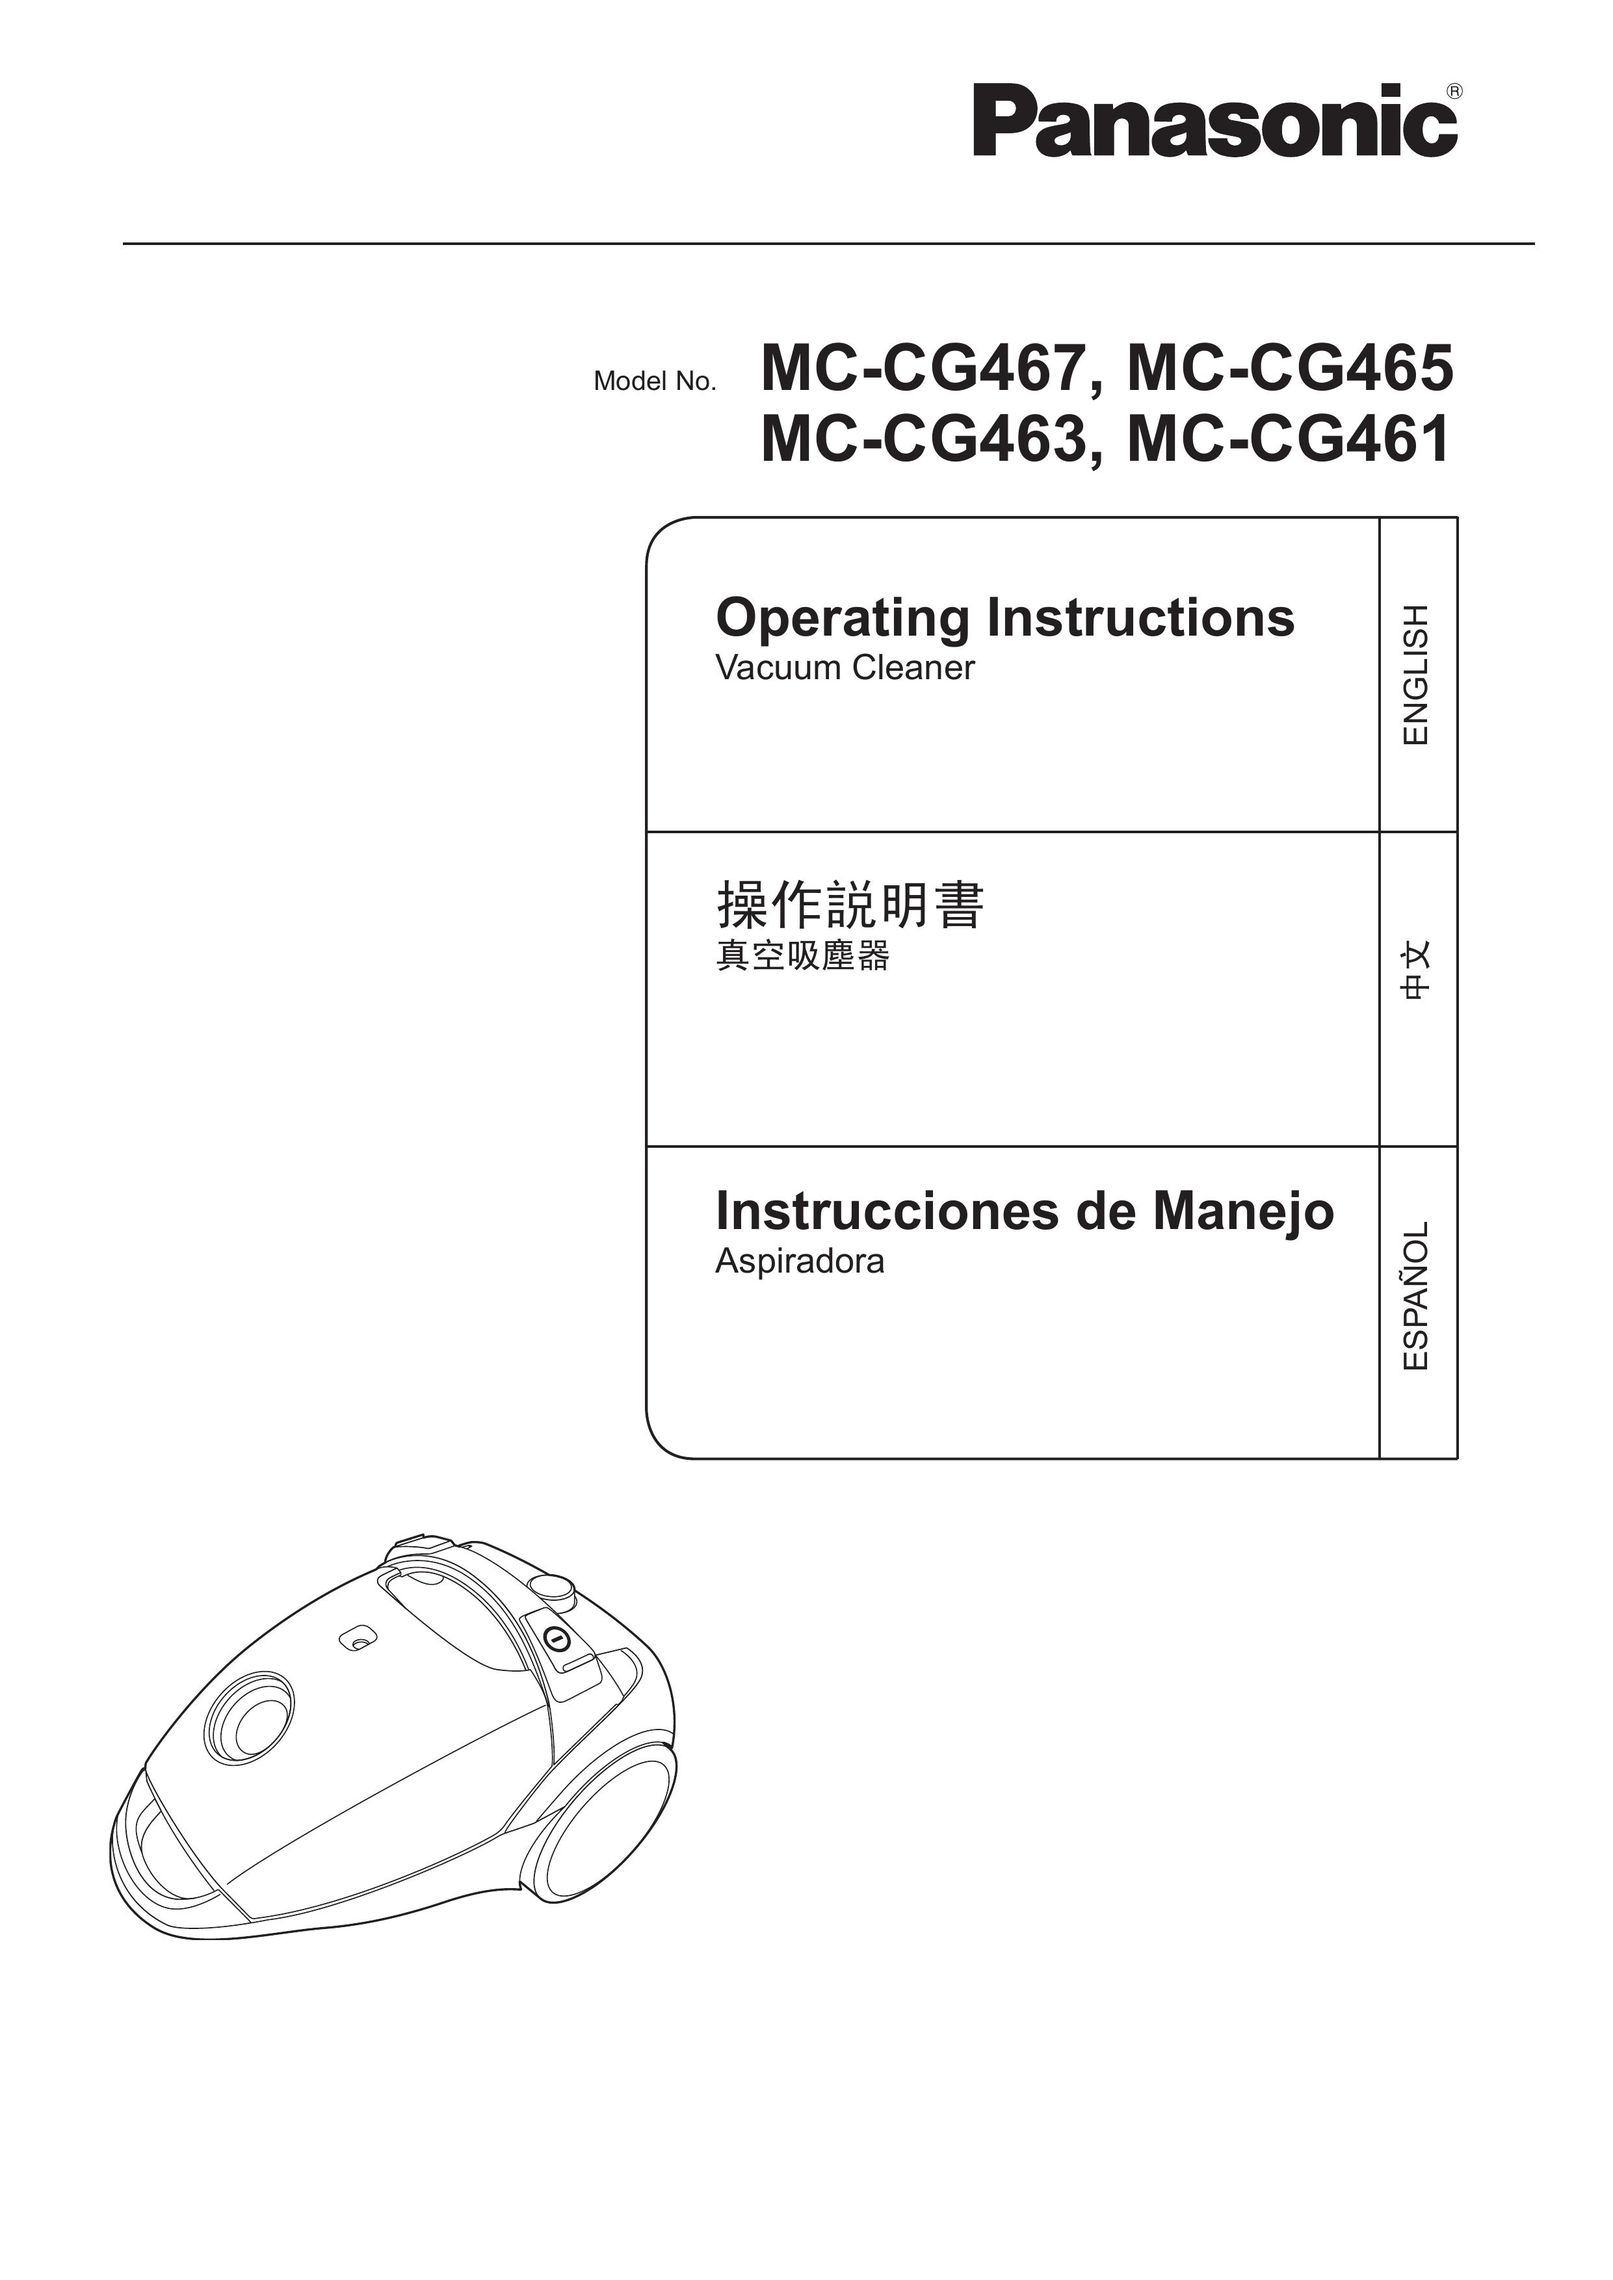 Panasonic MC-CG465 Vacuum Cleaner User Manual